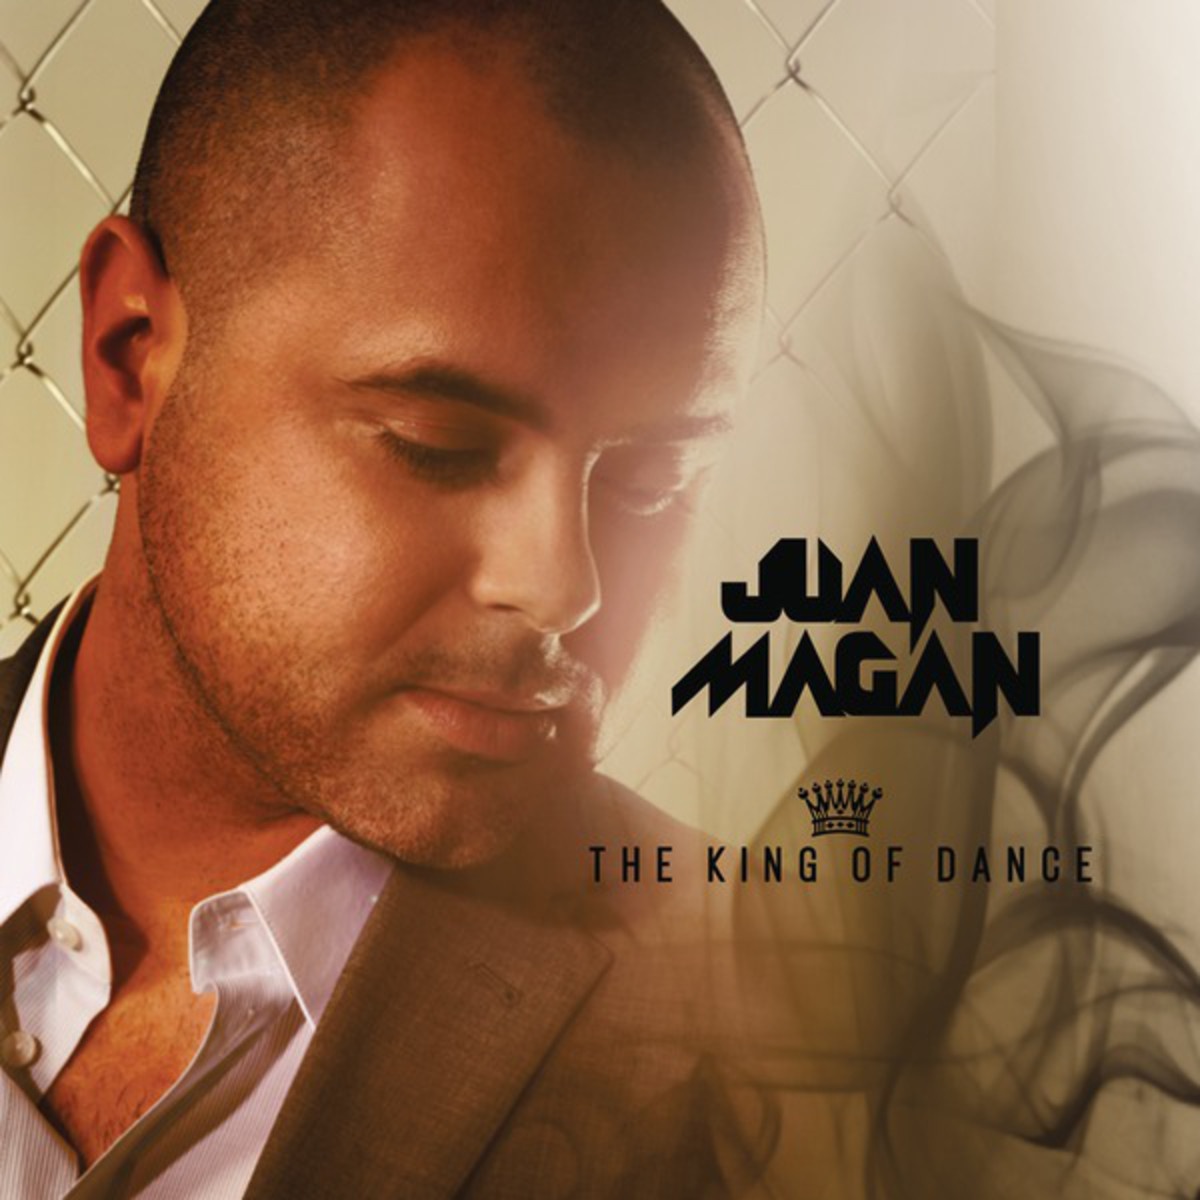 Coconut Tree (Juan Mag n Remix)